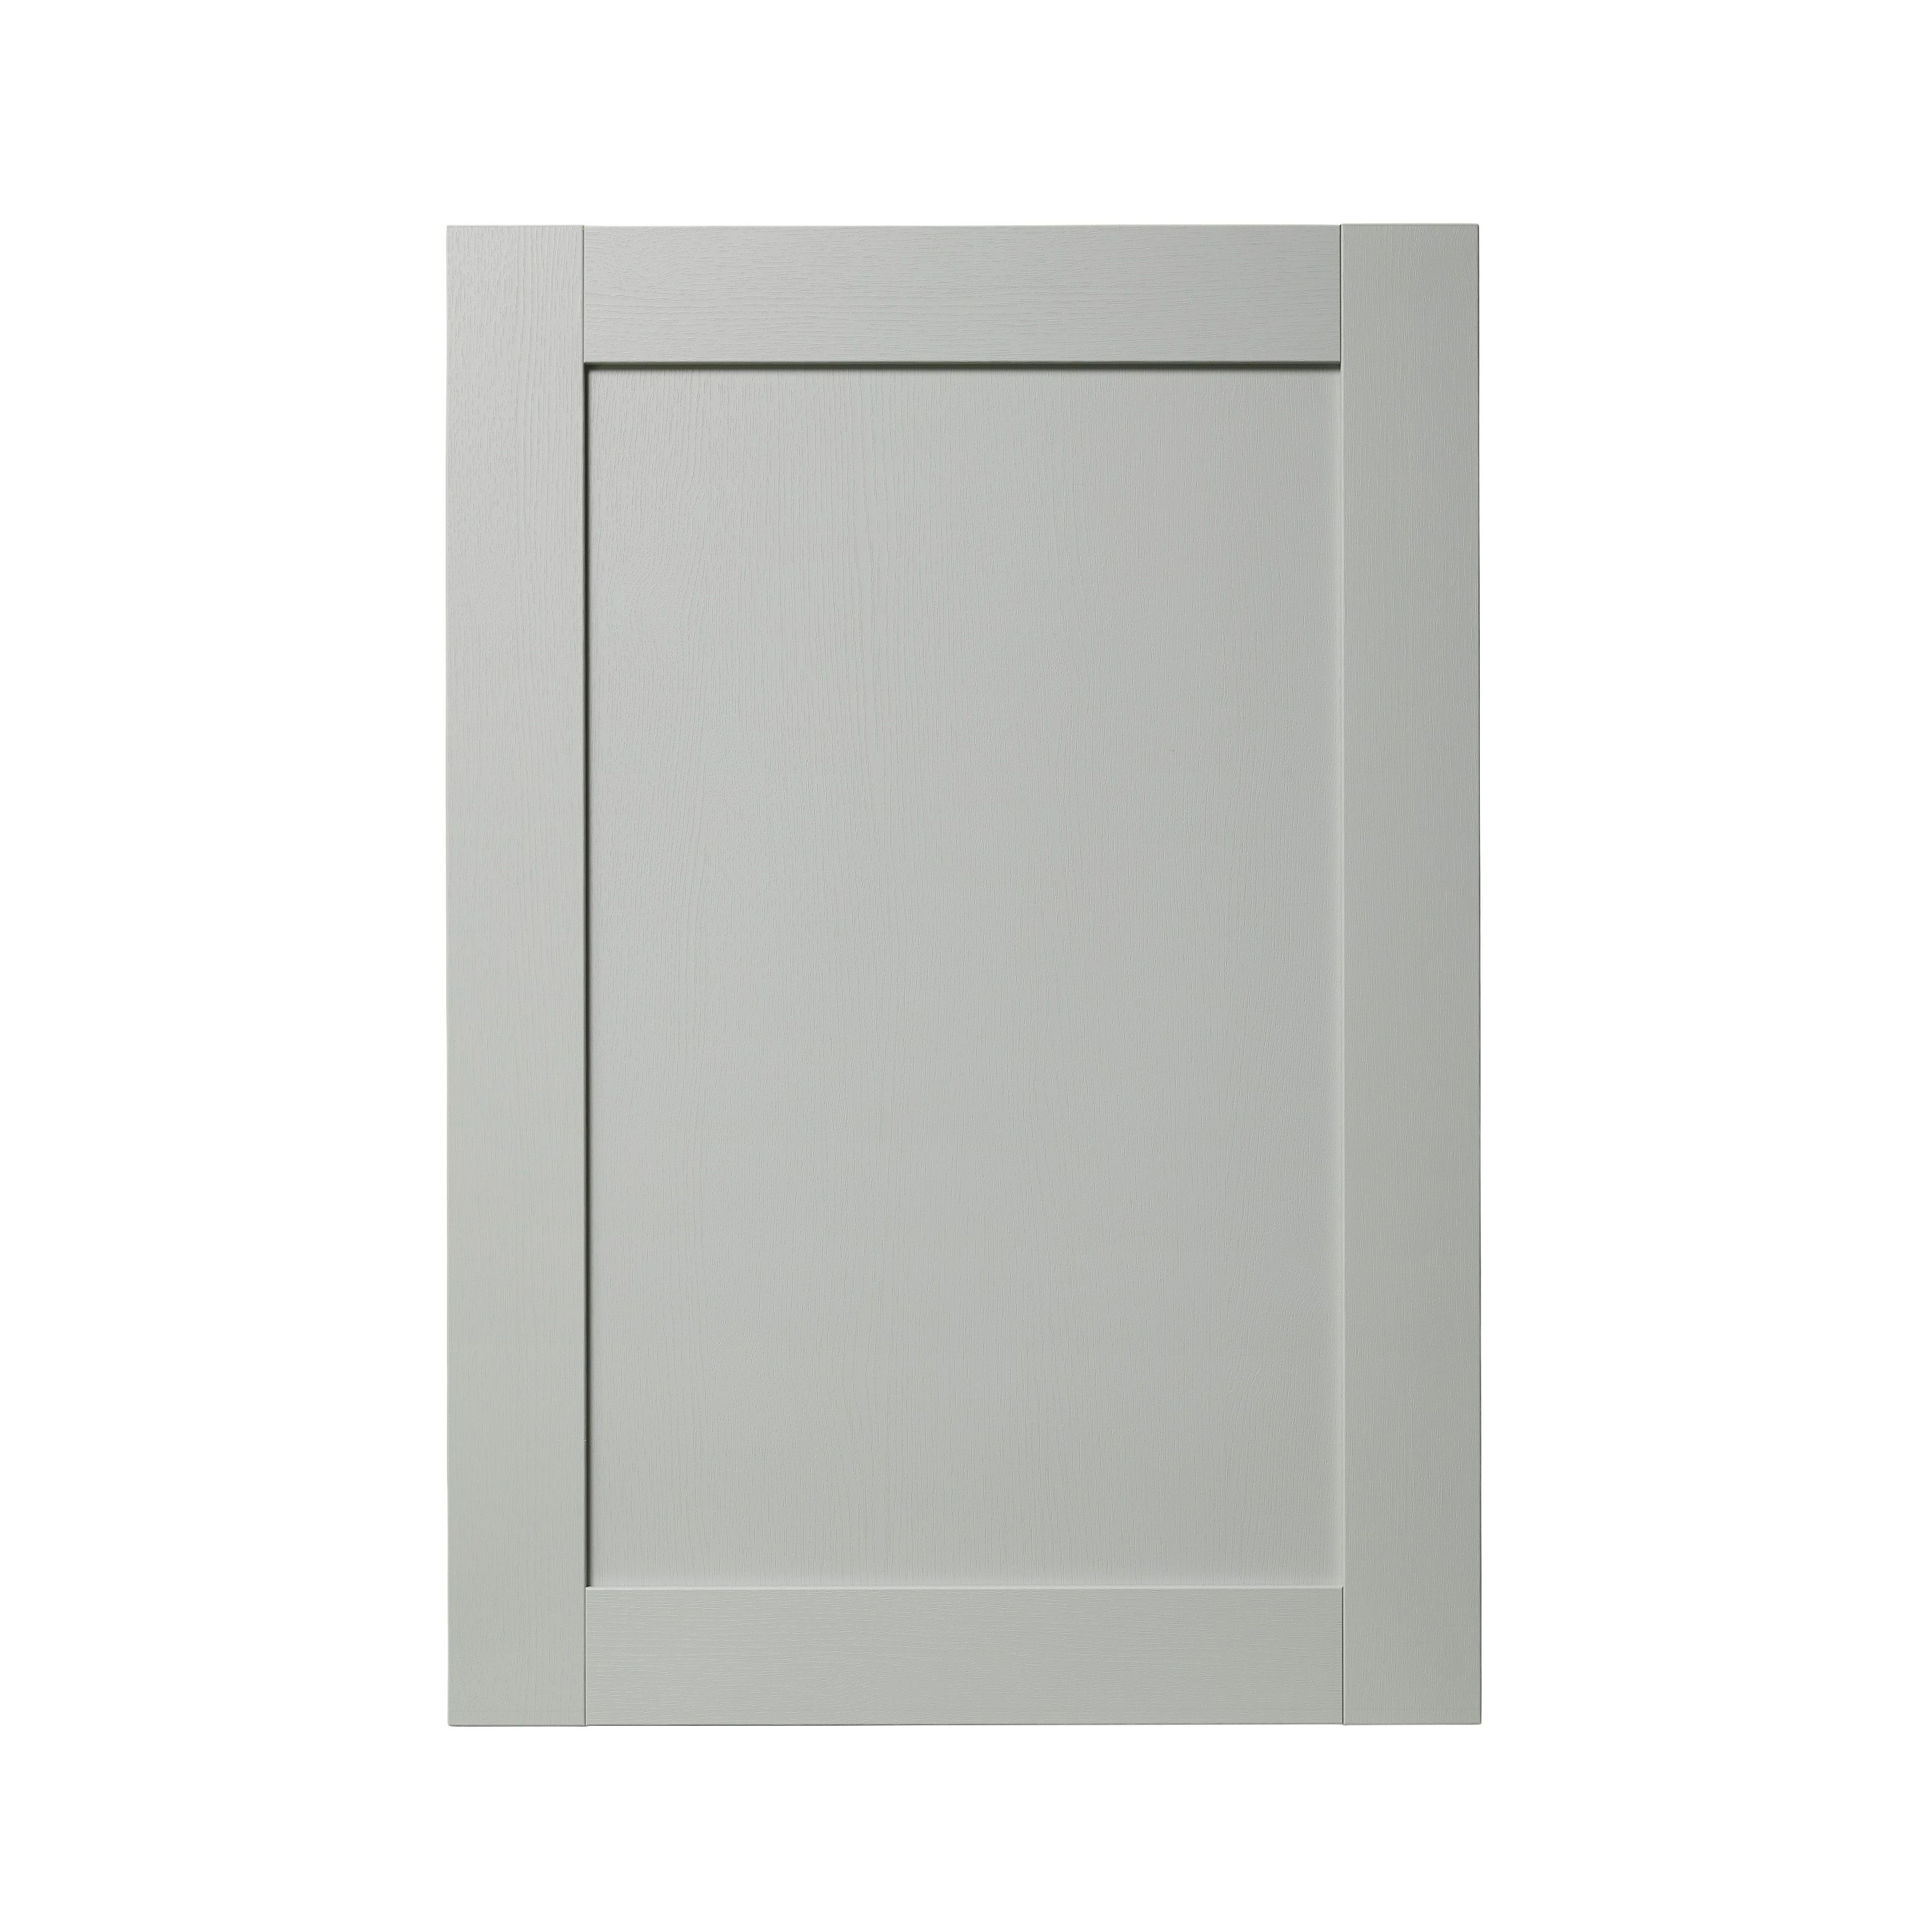 GoodHome Alpinia Matt grey painted wood effect shaker Tall appliance Cabinet door (W)600mm (H)867mm (T)18mm